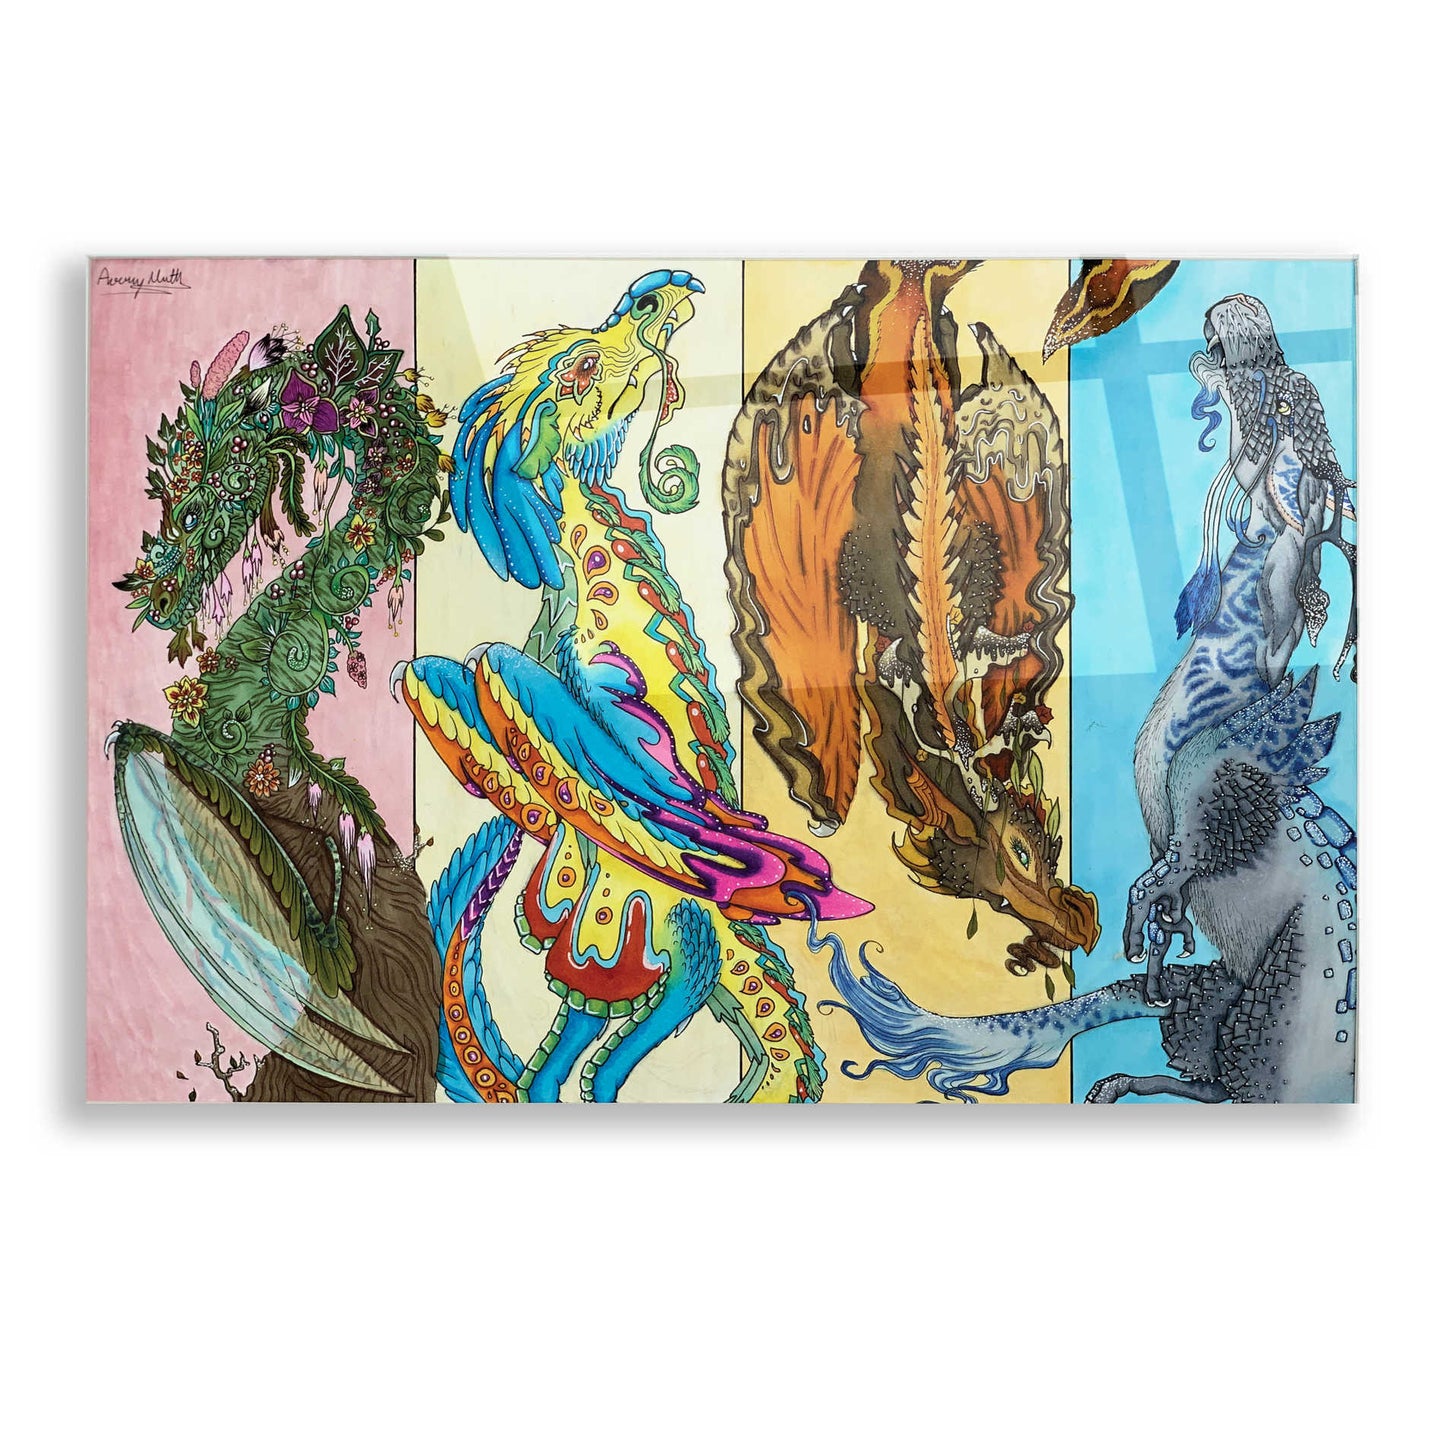 Epic Art 'The Four Seasons' by Avery Multer, Acrylic Glass Wall Art,16x12